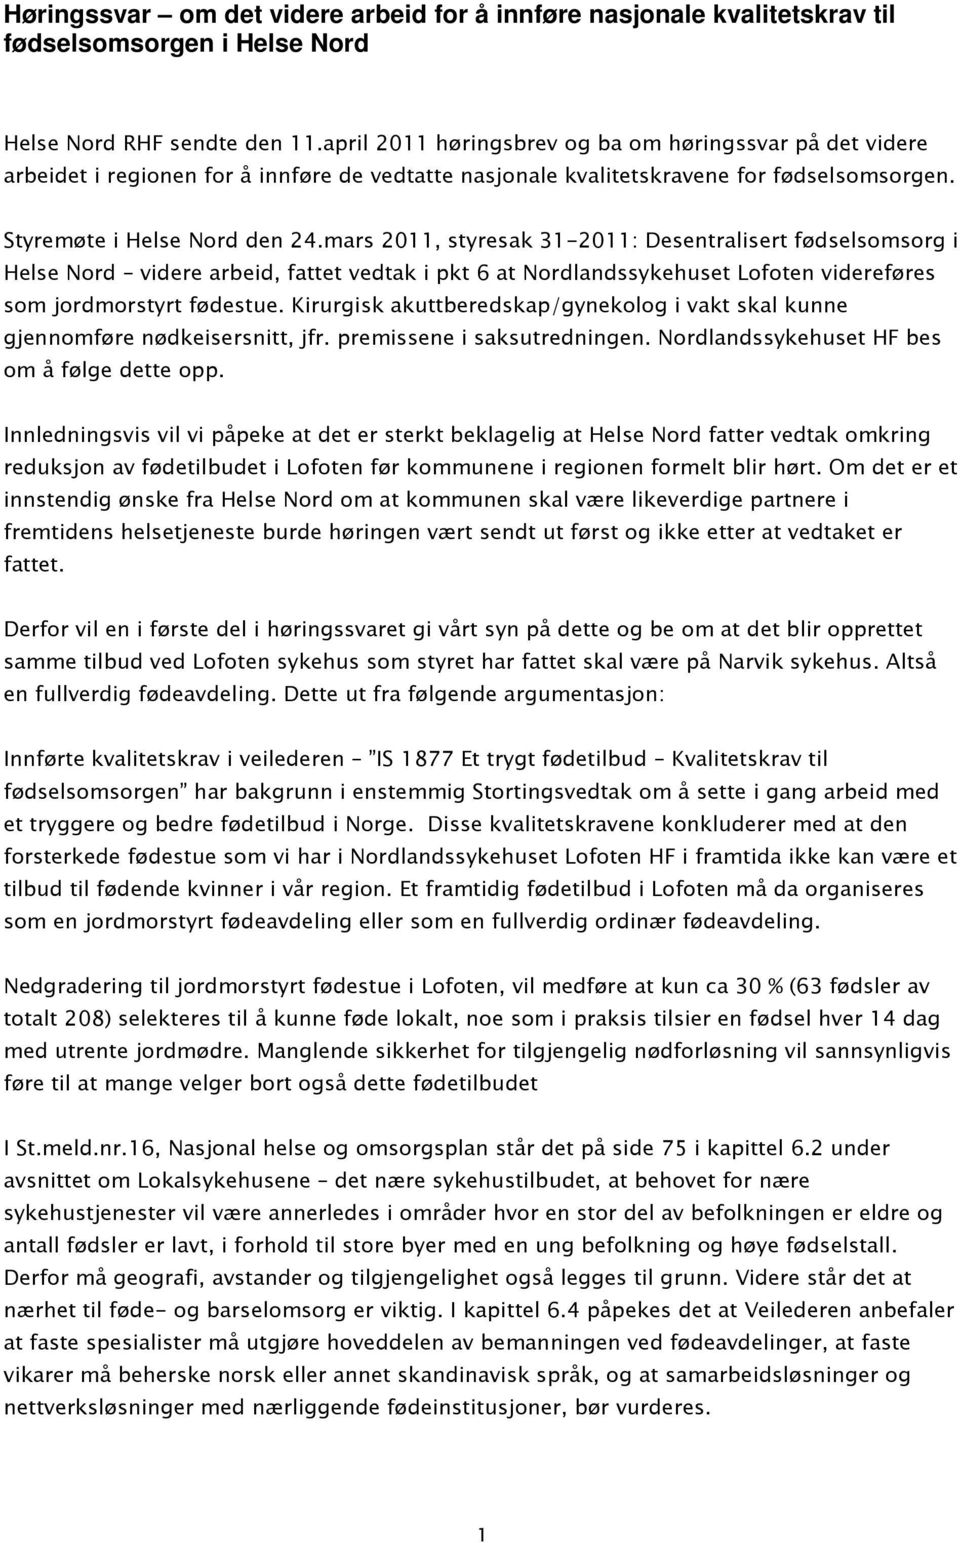 mars 2011, styresak 31-2011: Desentralisert fødselsomsorg i Helse Nord videre arbeid, fattet vedtak i pkt 6 at Nordlandssykehuset Lofoten videreføres som jordmorstyrt fødestue.